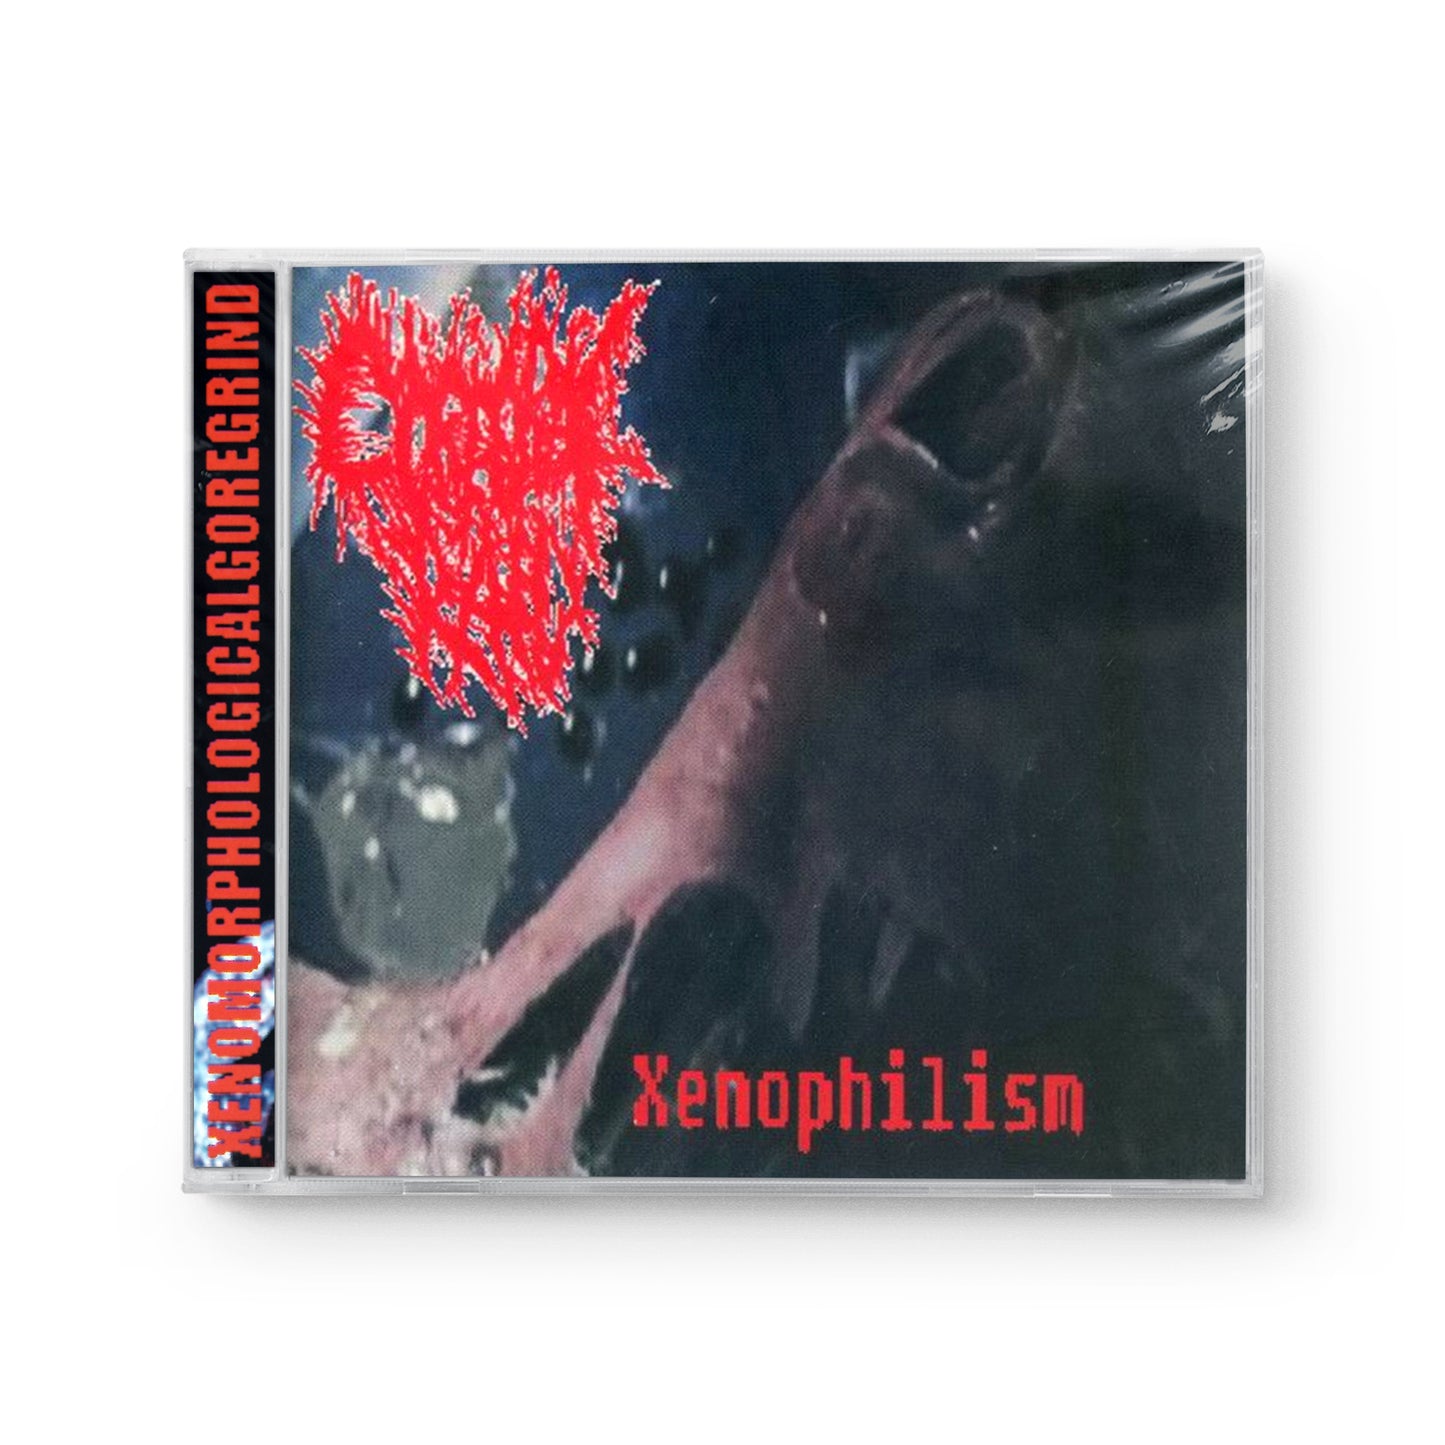 Corporal Raid "Xenophilism" CD